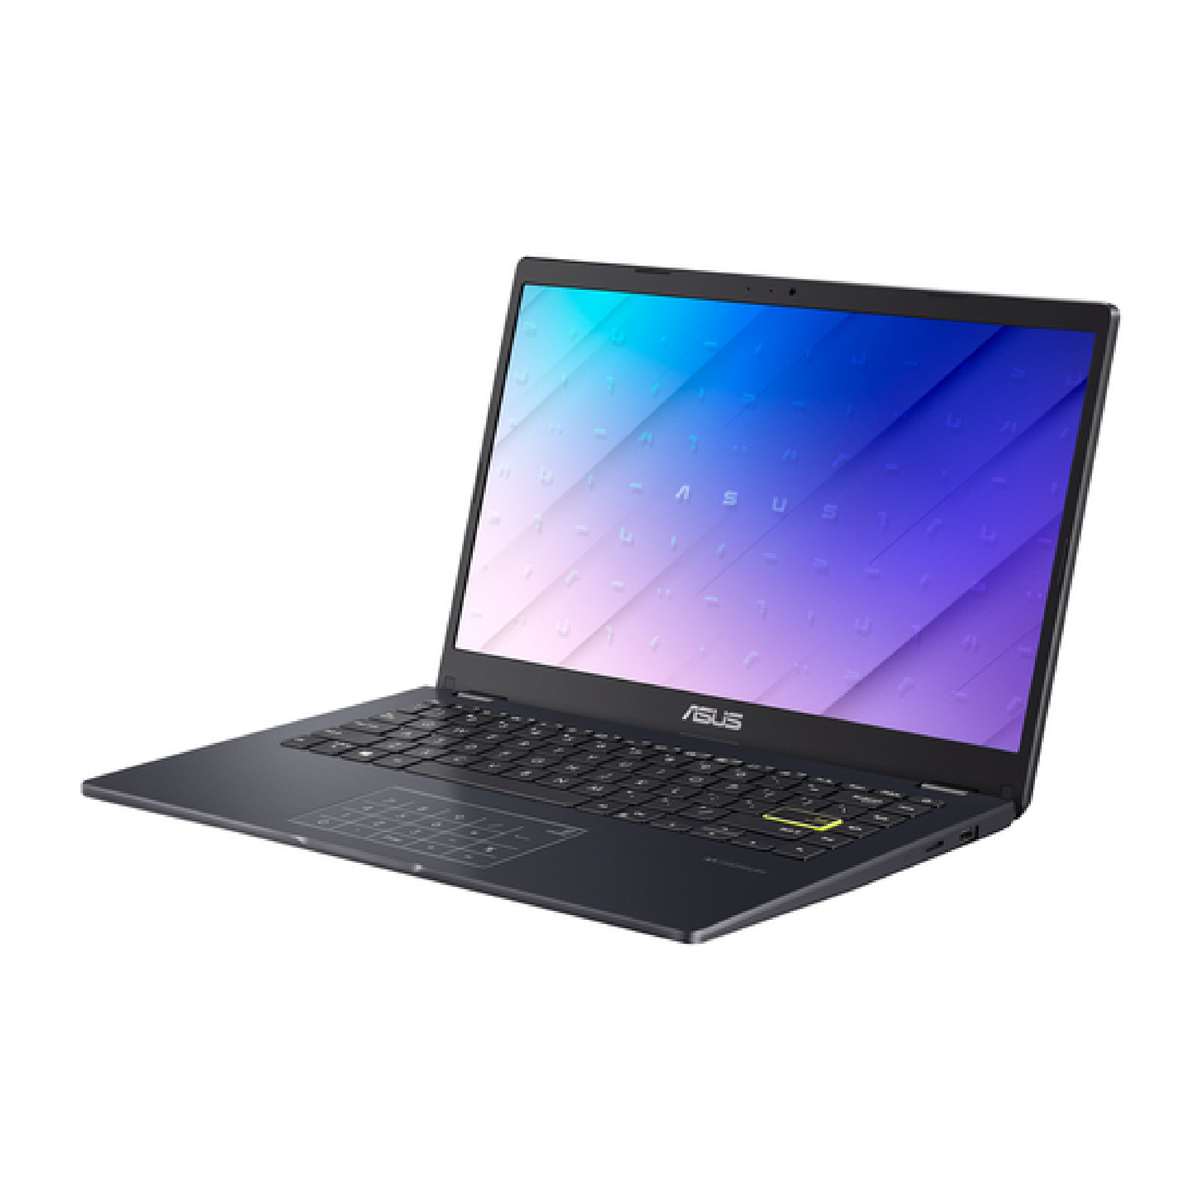 Asus Notebook E410MA-M04710,Celeron,4GB RAM,64GB eMMC,Intel UHD Graphics,14.0" HD,Windows 10,English Keyboard